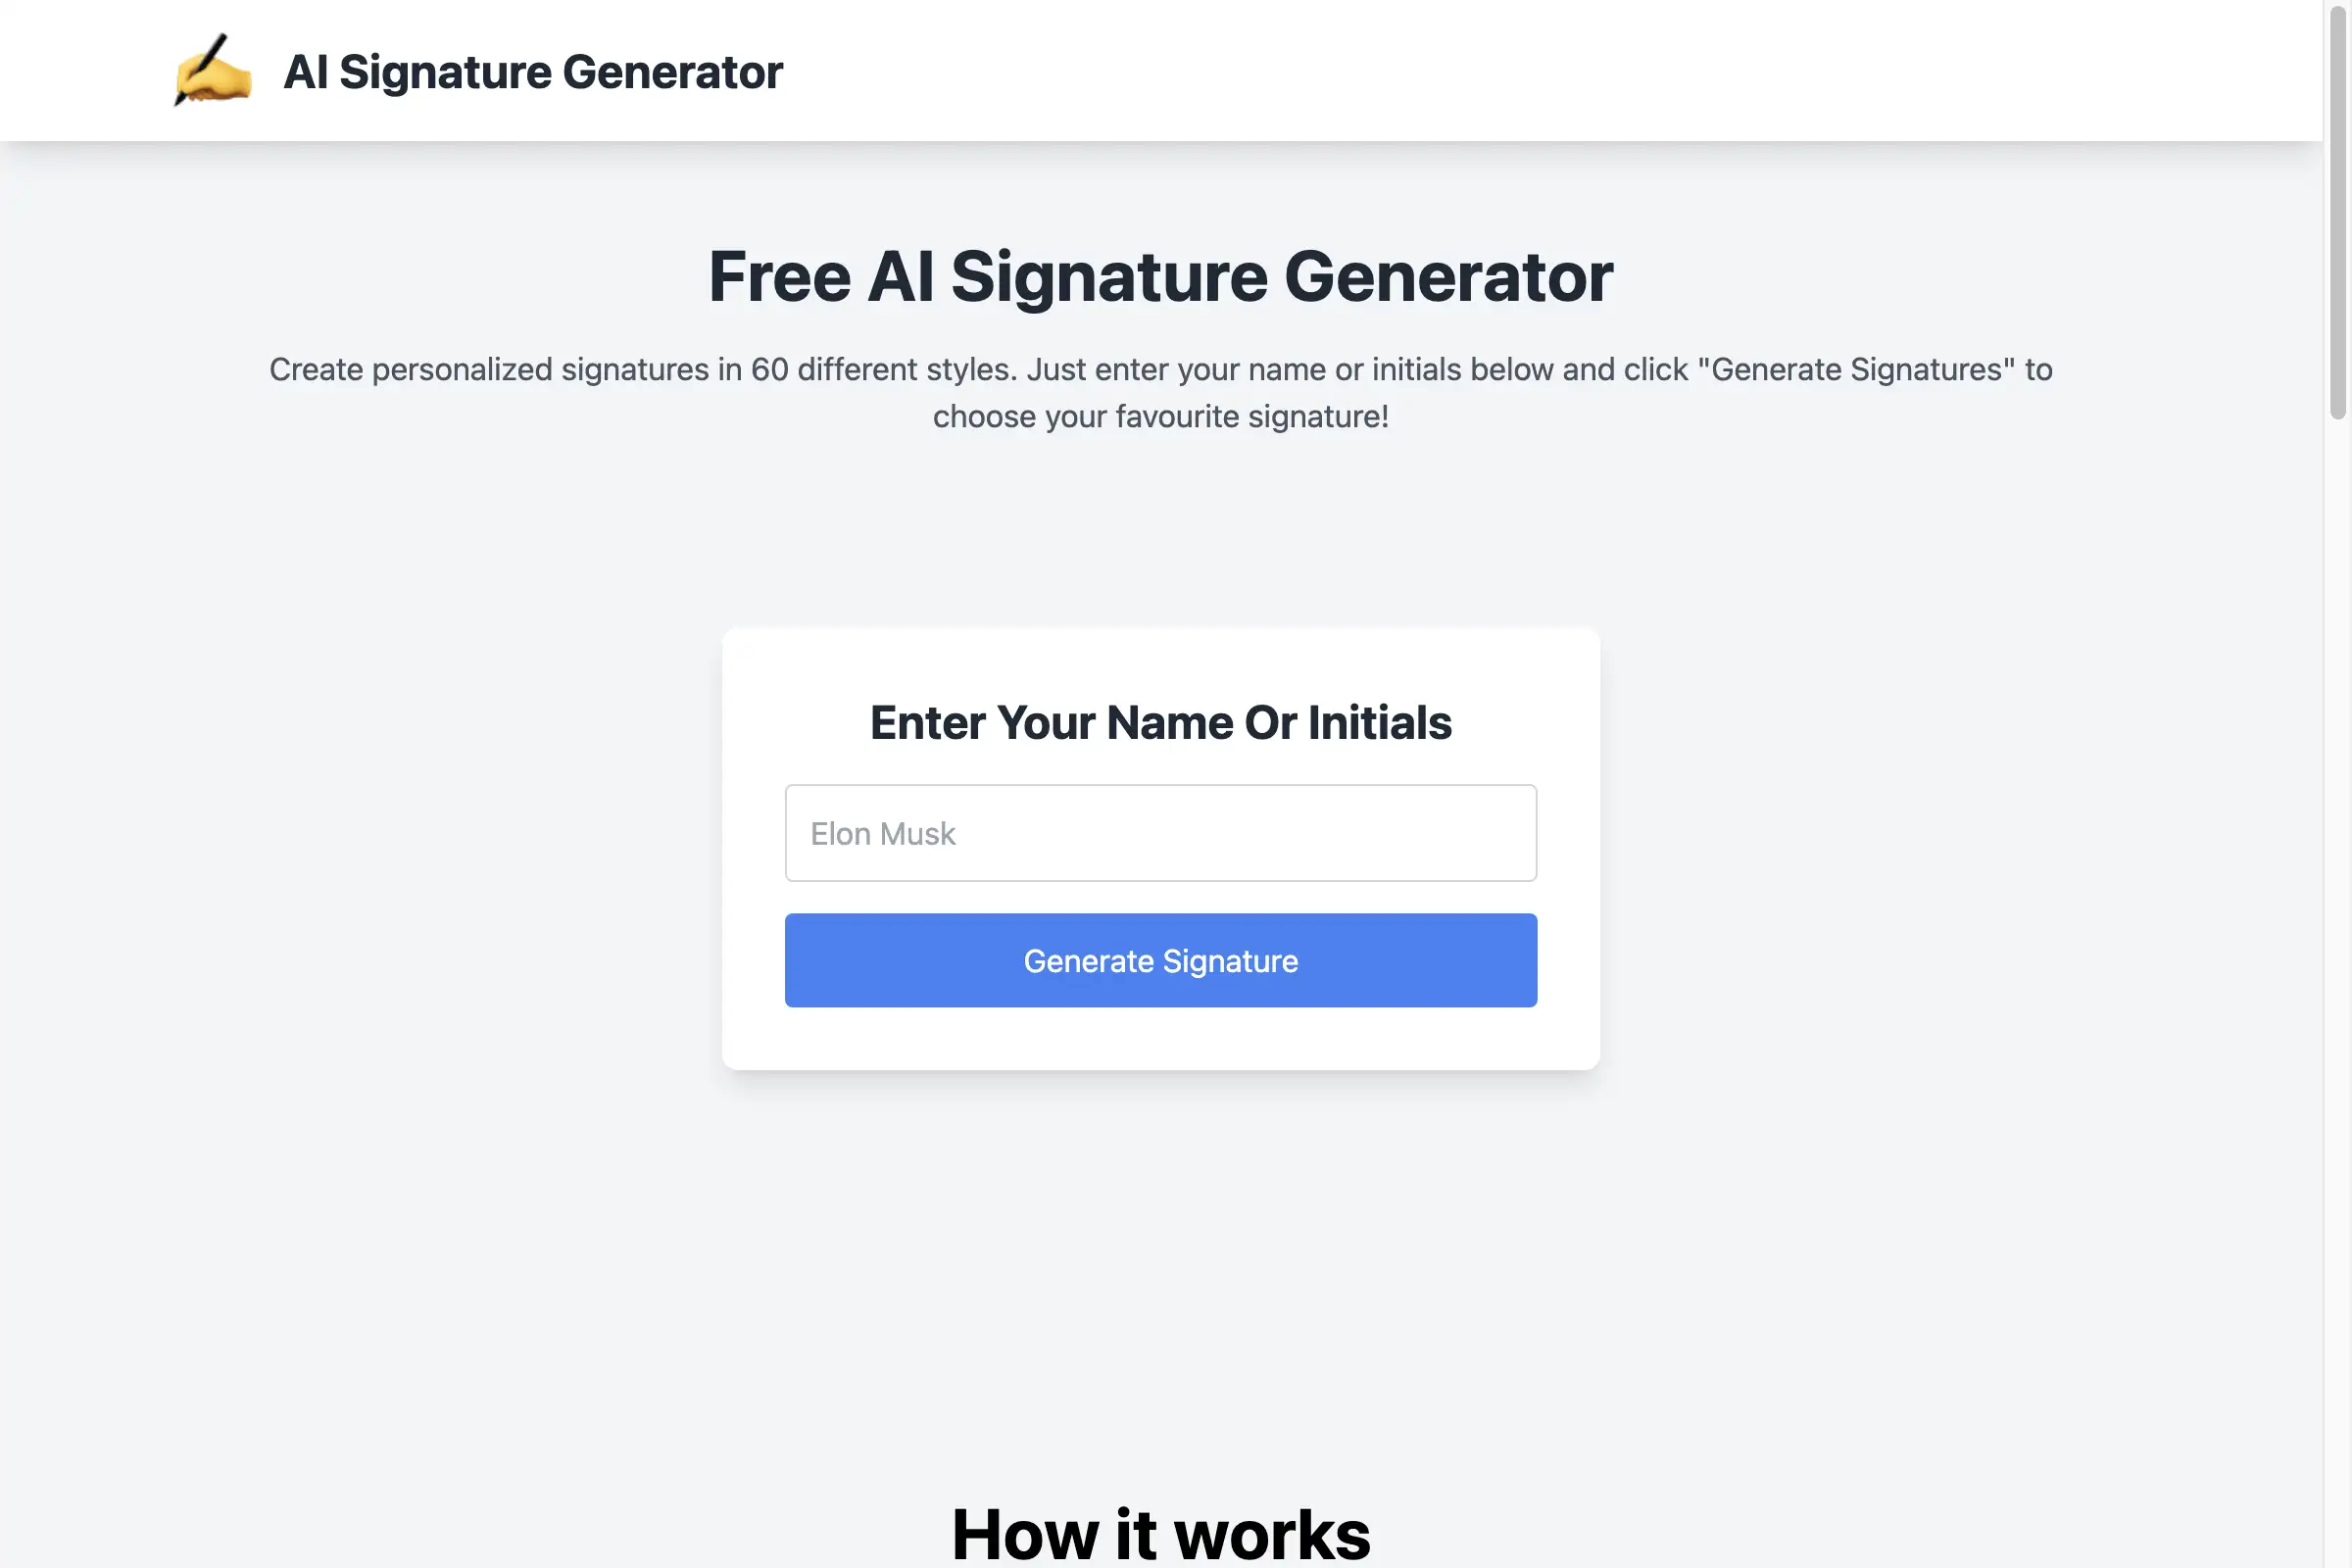 Free AI Signature Generator